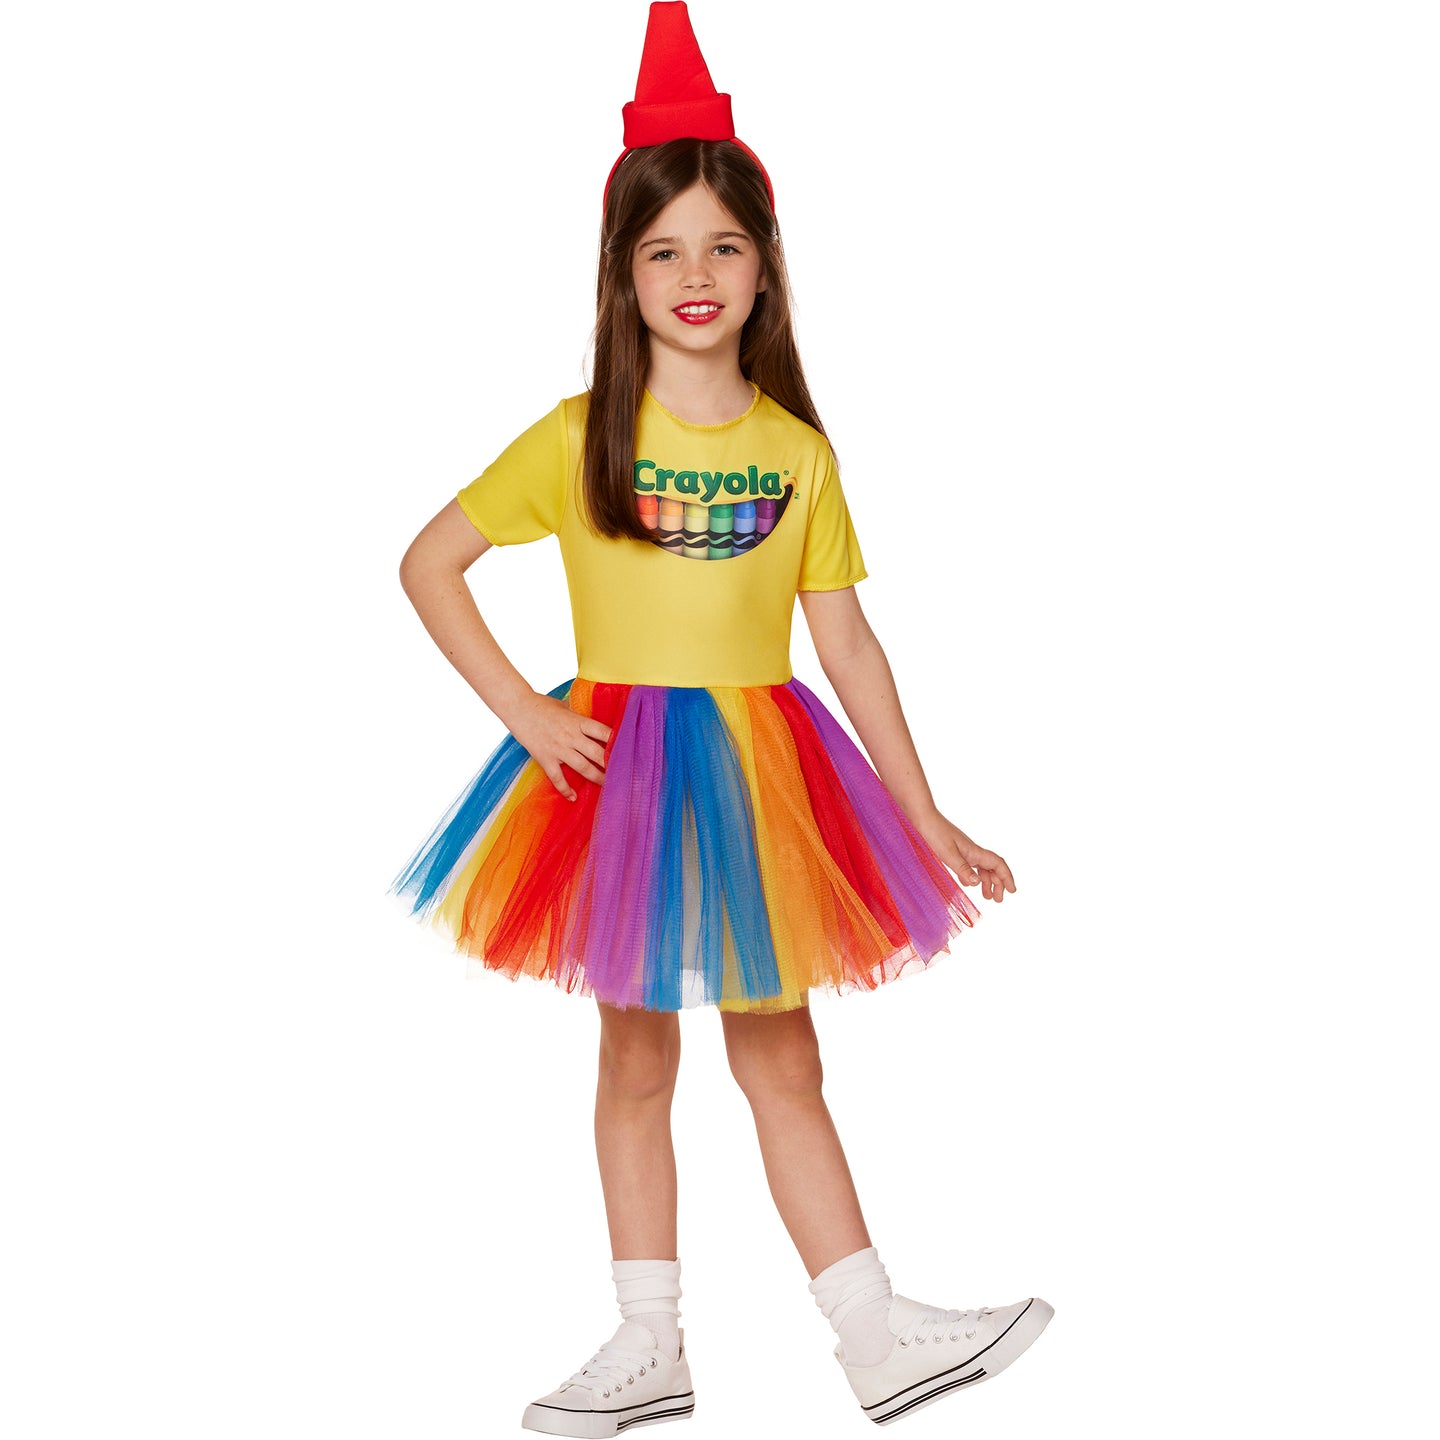 InSpirit Designs Child Crayola Box Costume